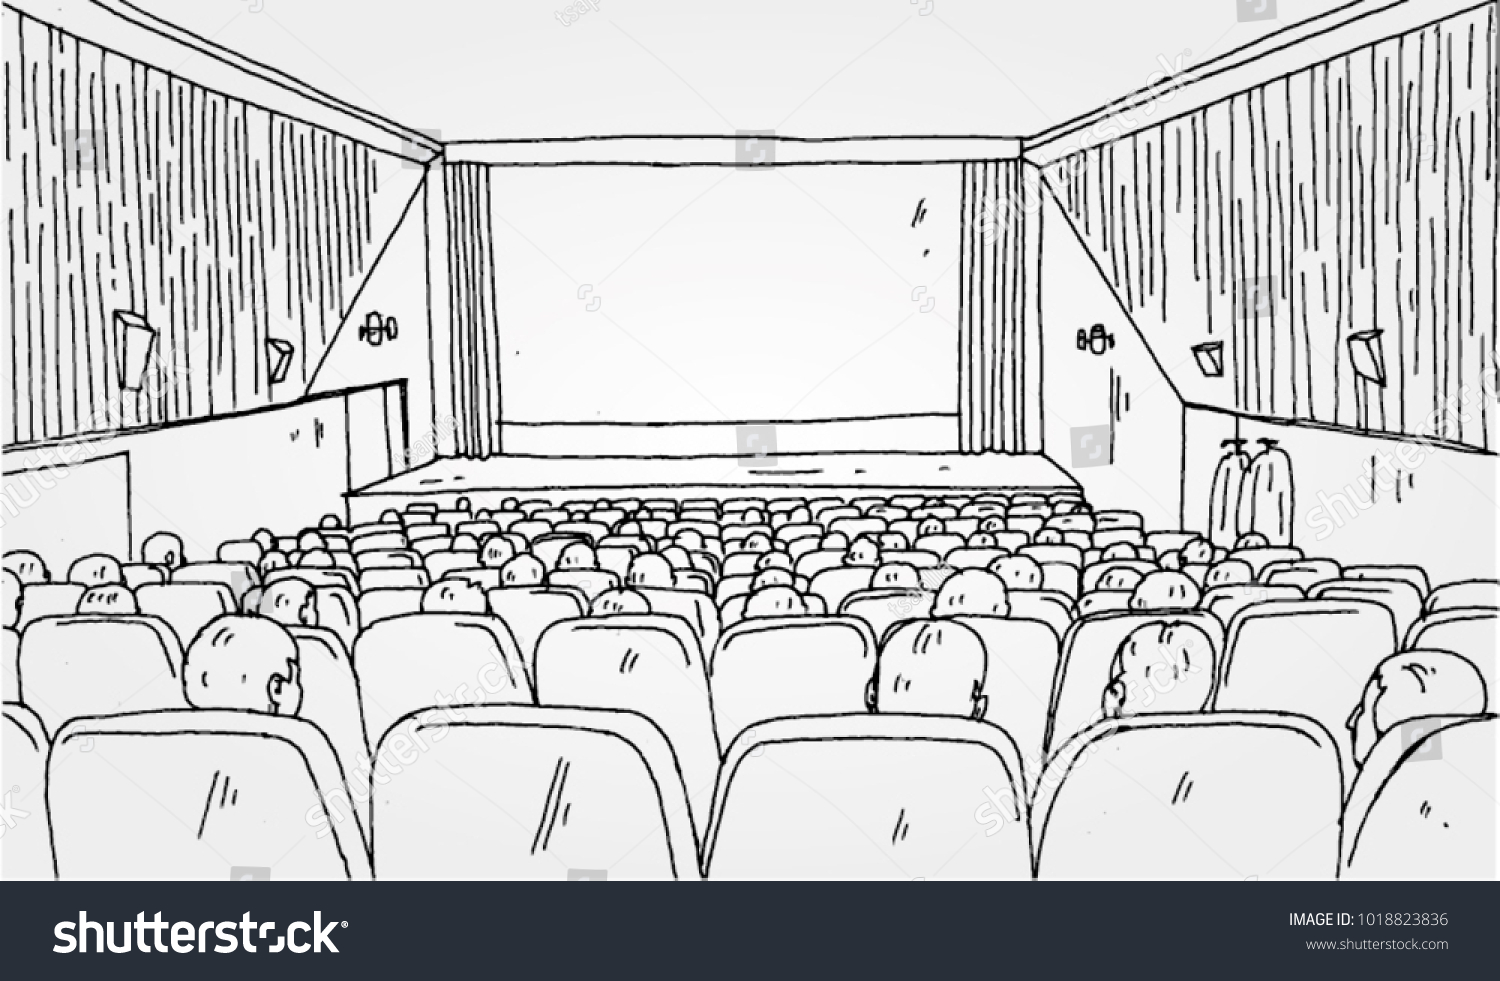 Рисунок кинотеатра карандашом